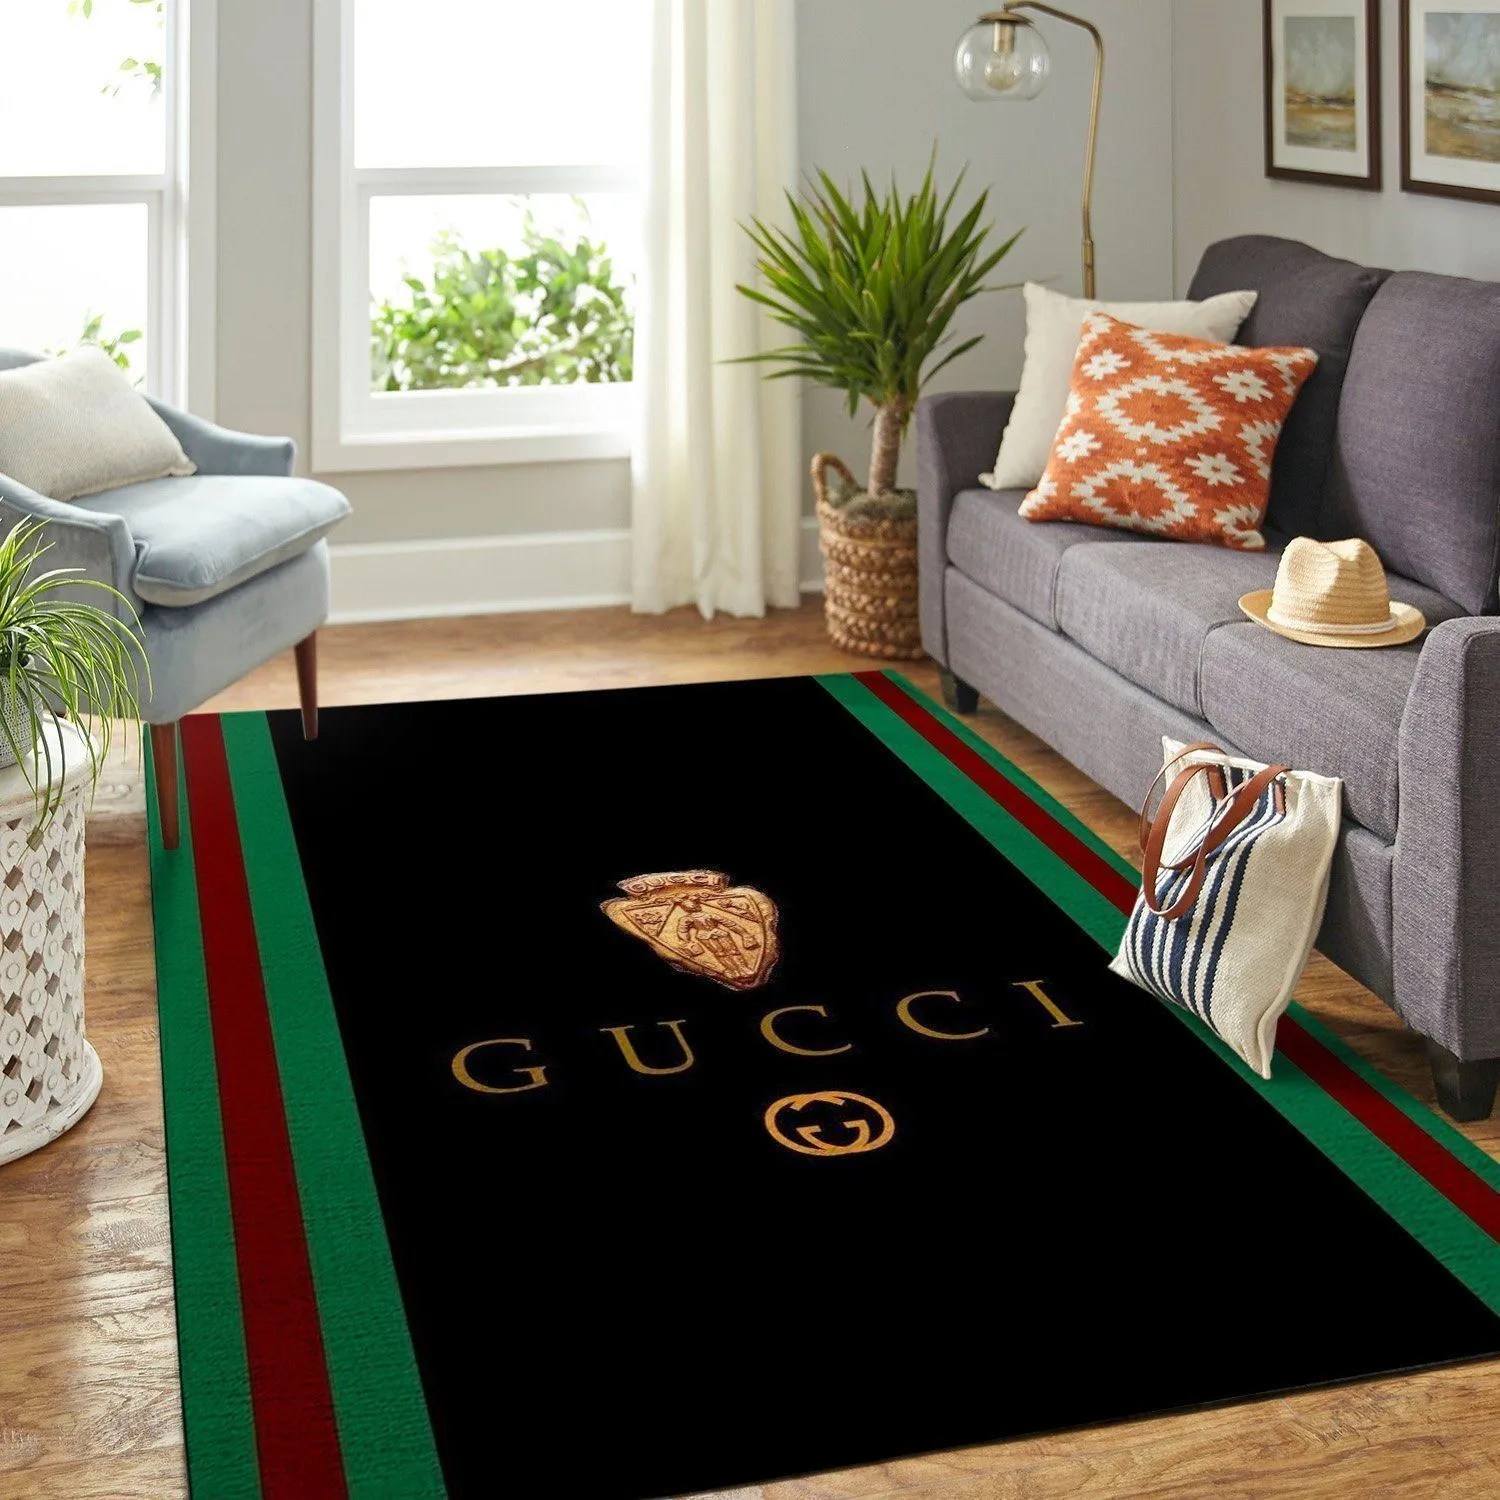 Gucci Black Rectangle Rug Door Mat Luxury Area Carpet Fashion Brand Home Decor